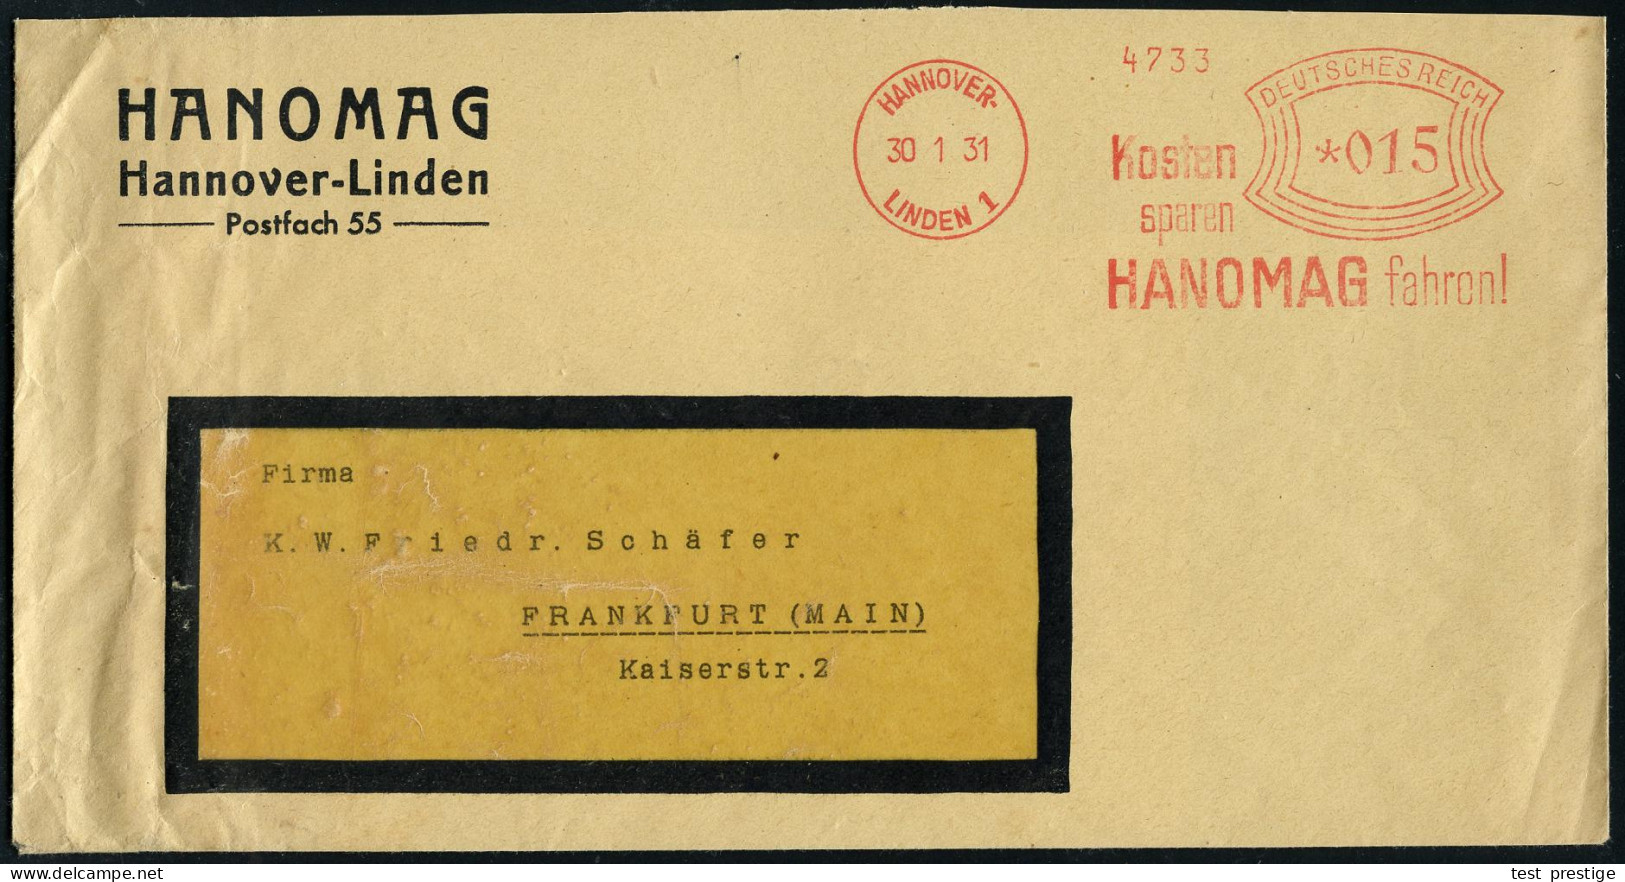 HANNOVER-/ LINDEN 1/ Kosten/ Sparen/ HANOMAG Fahren! 1931 (30.1.) AFS Francotyp Auf Firmen-Bf.: HANOMAG.. = Hersteller V - Camions